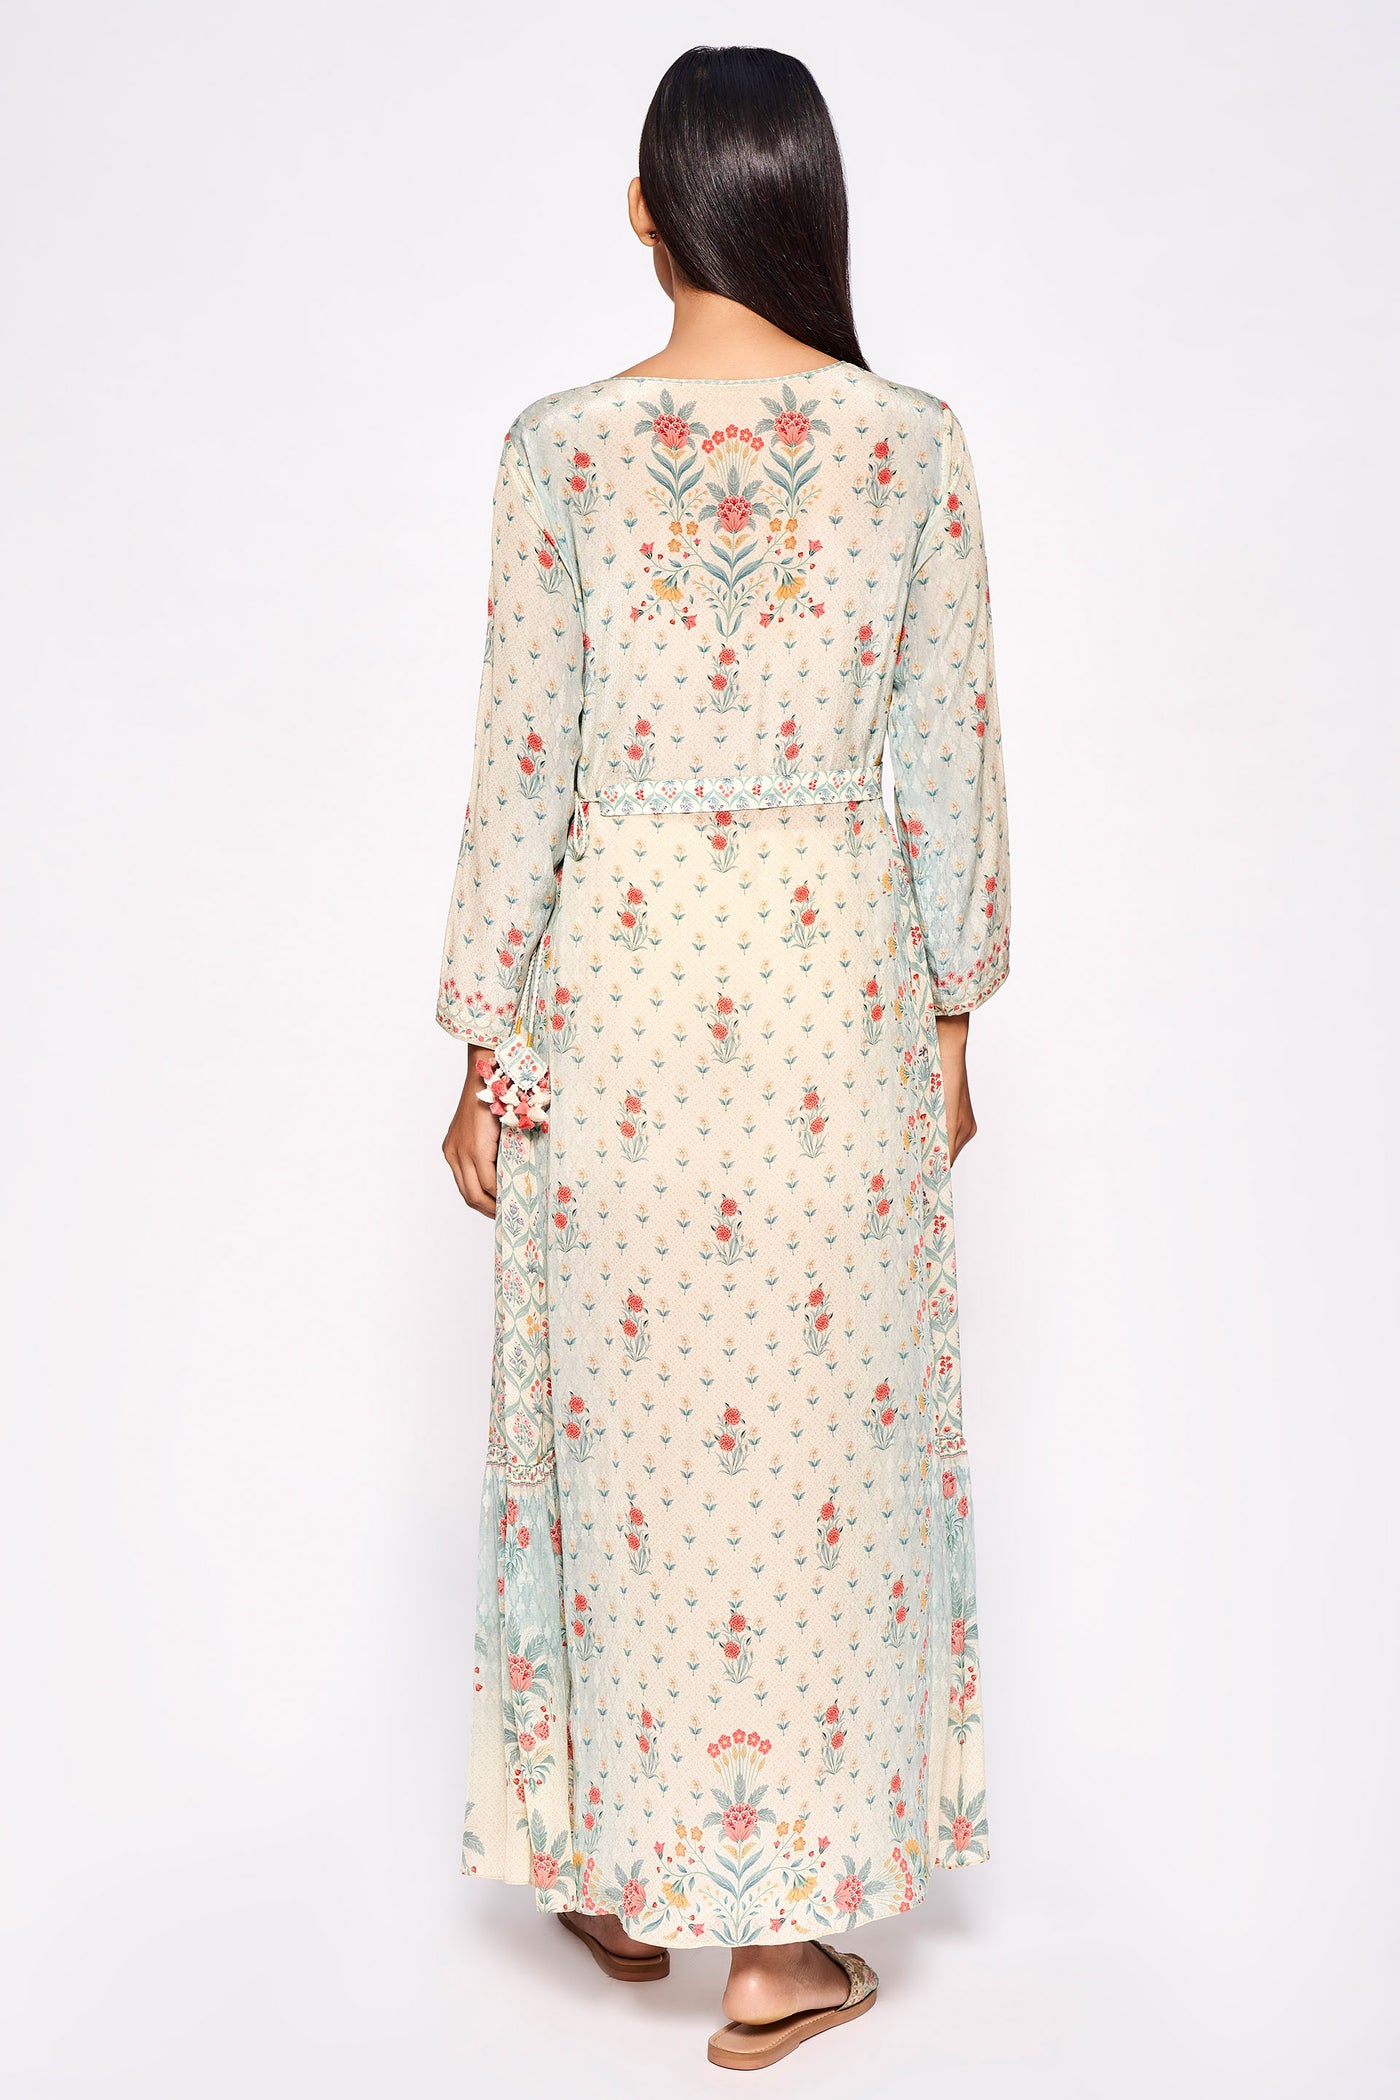 Anita Dongre Devina Dress Natural western indian designer wear online shopping melange singapore